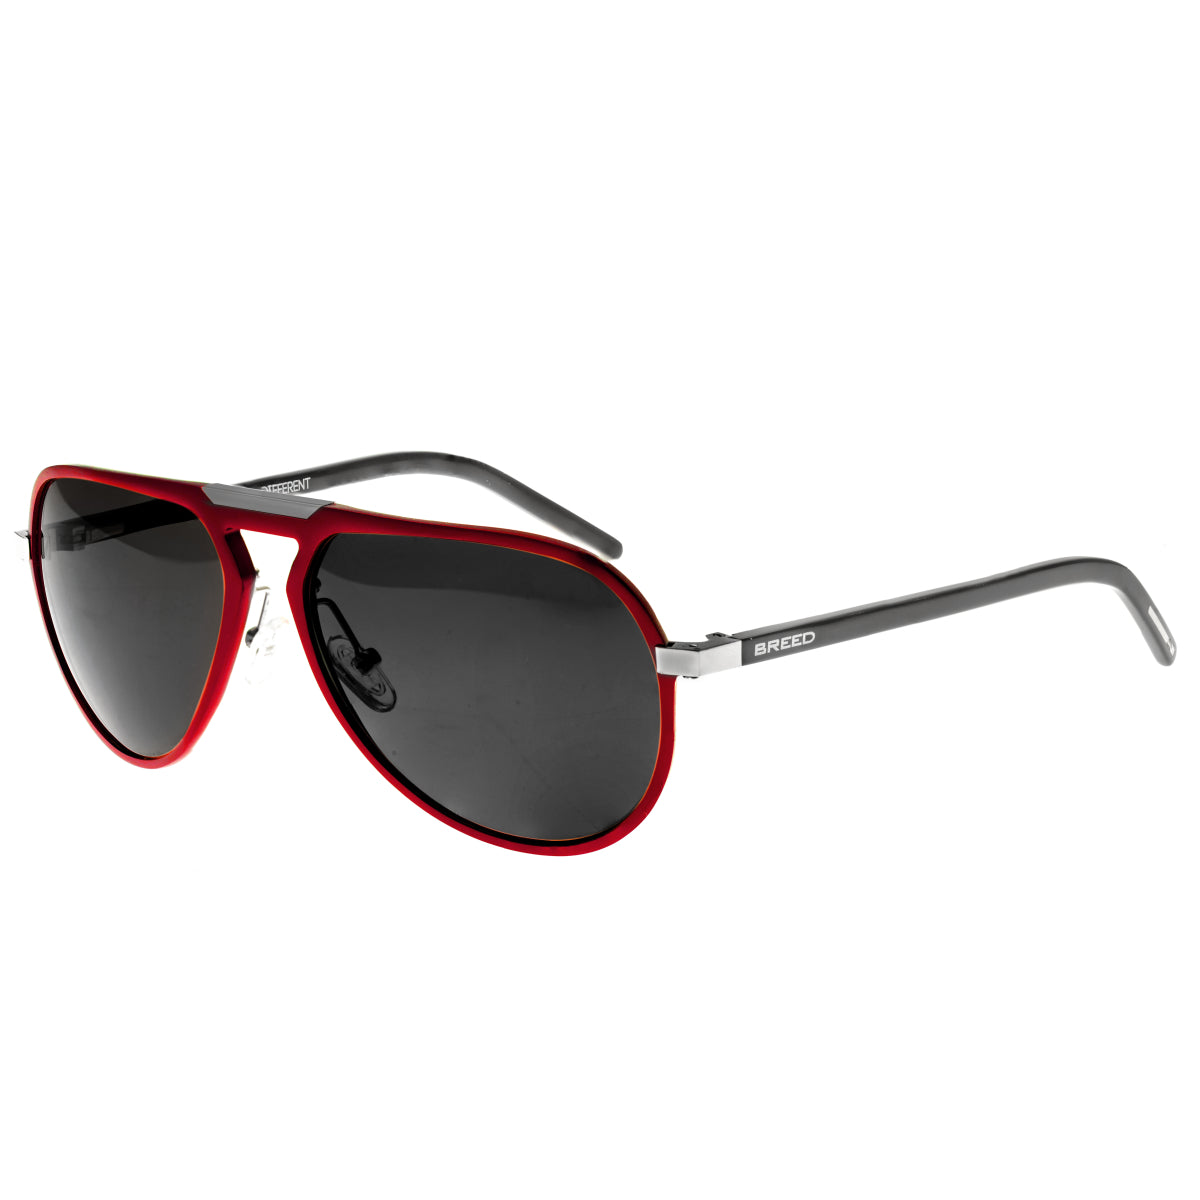 Breed Nova Aluminium Polarized Sunglasses - Red/Black - BSG018RD